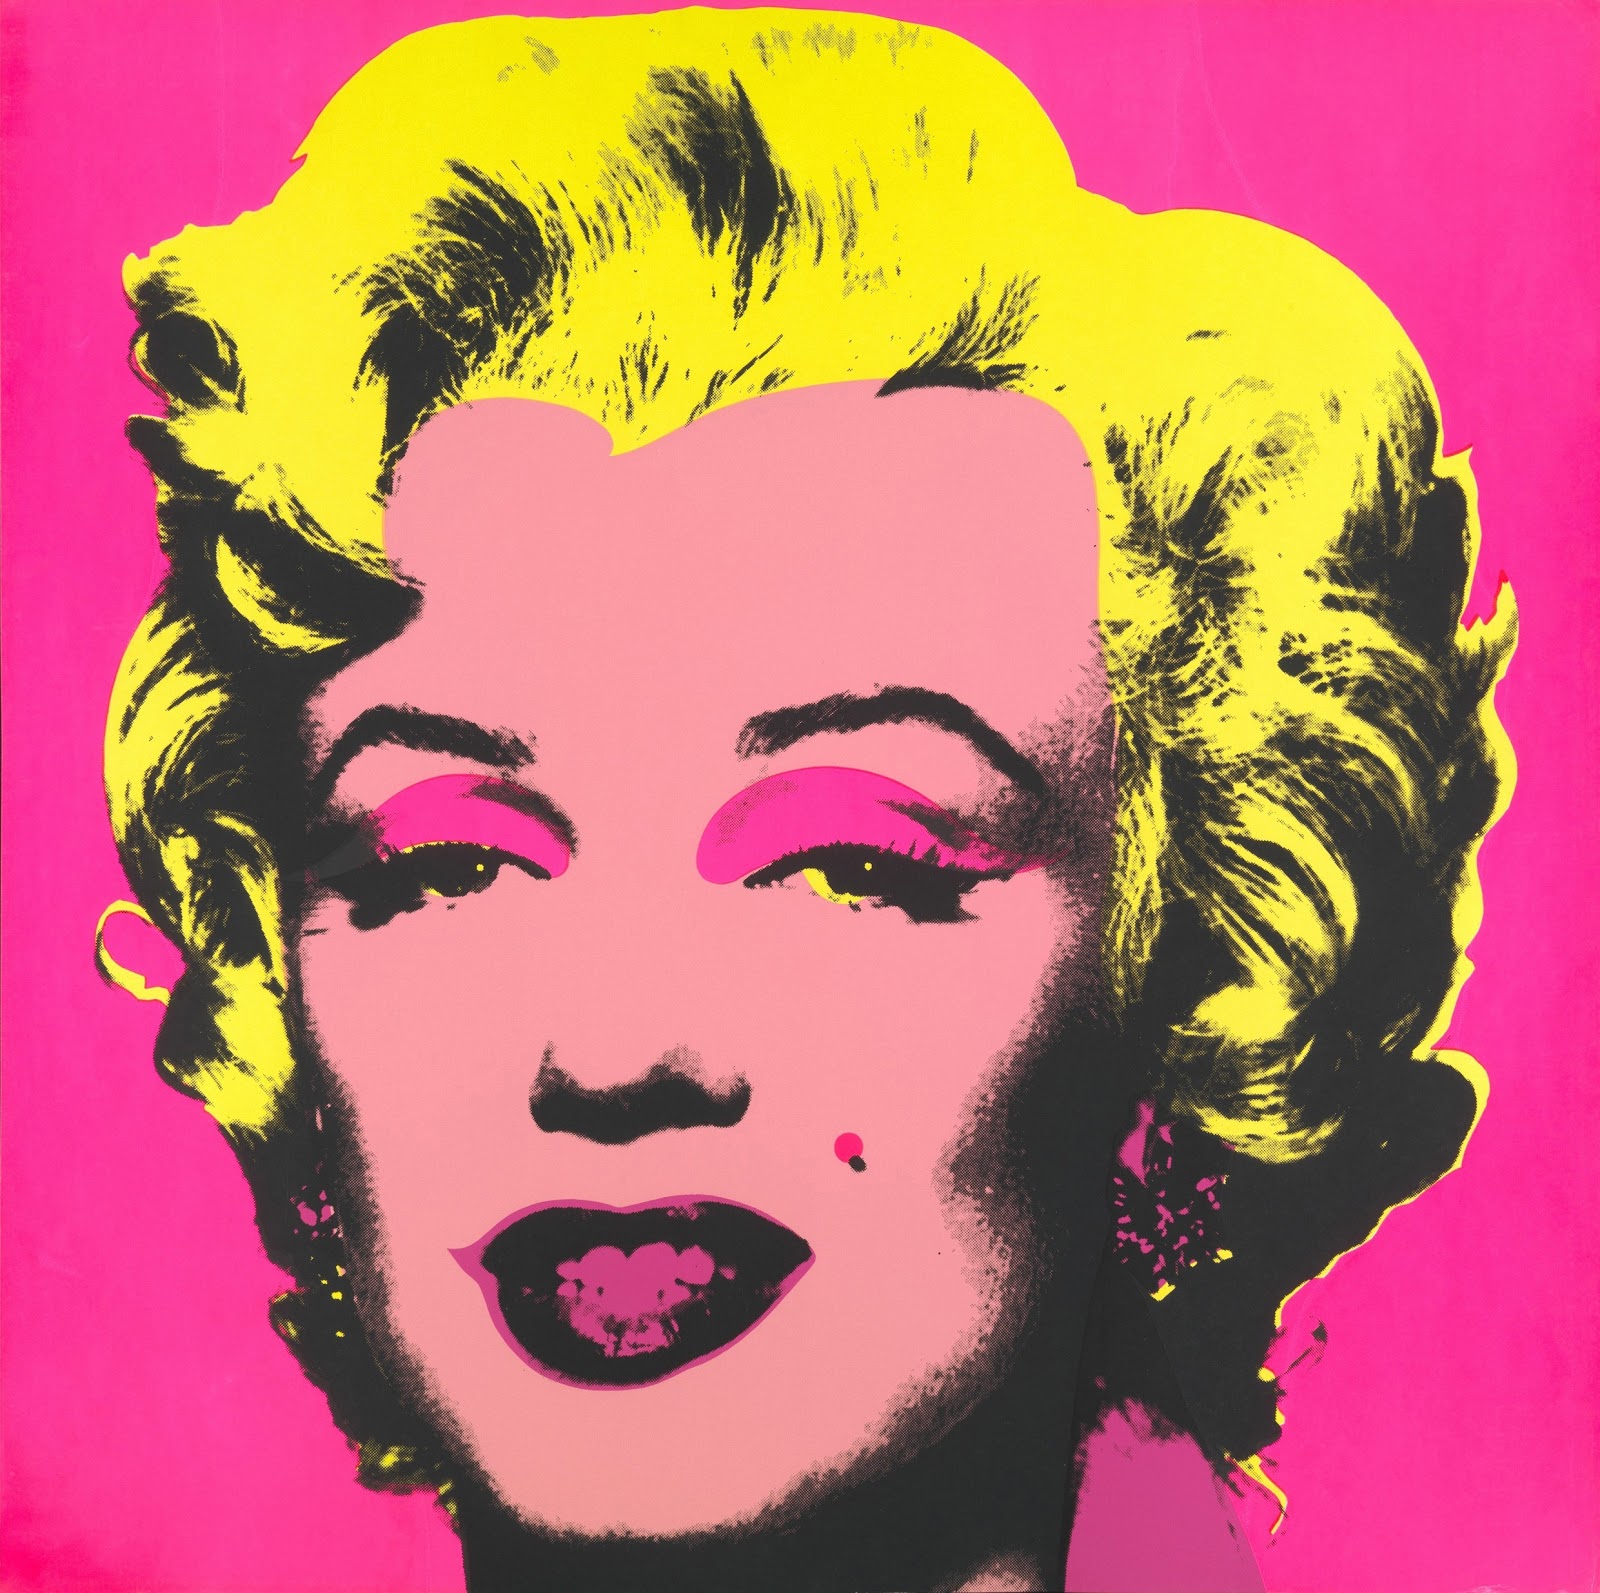 Andy+Warhol-1928-1987 (203).jpg